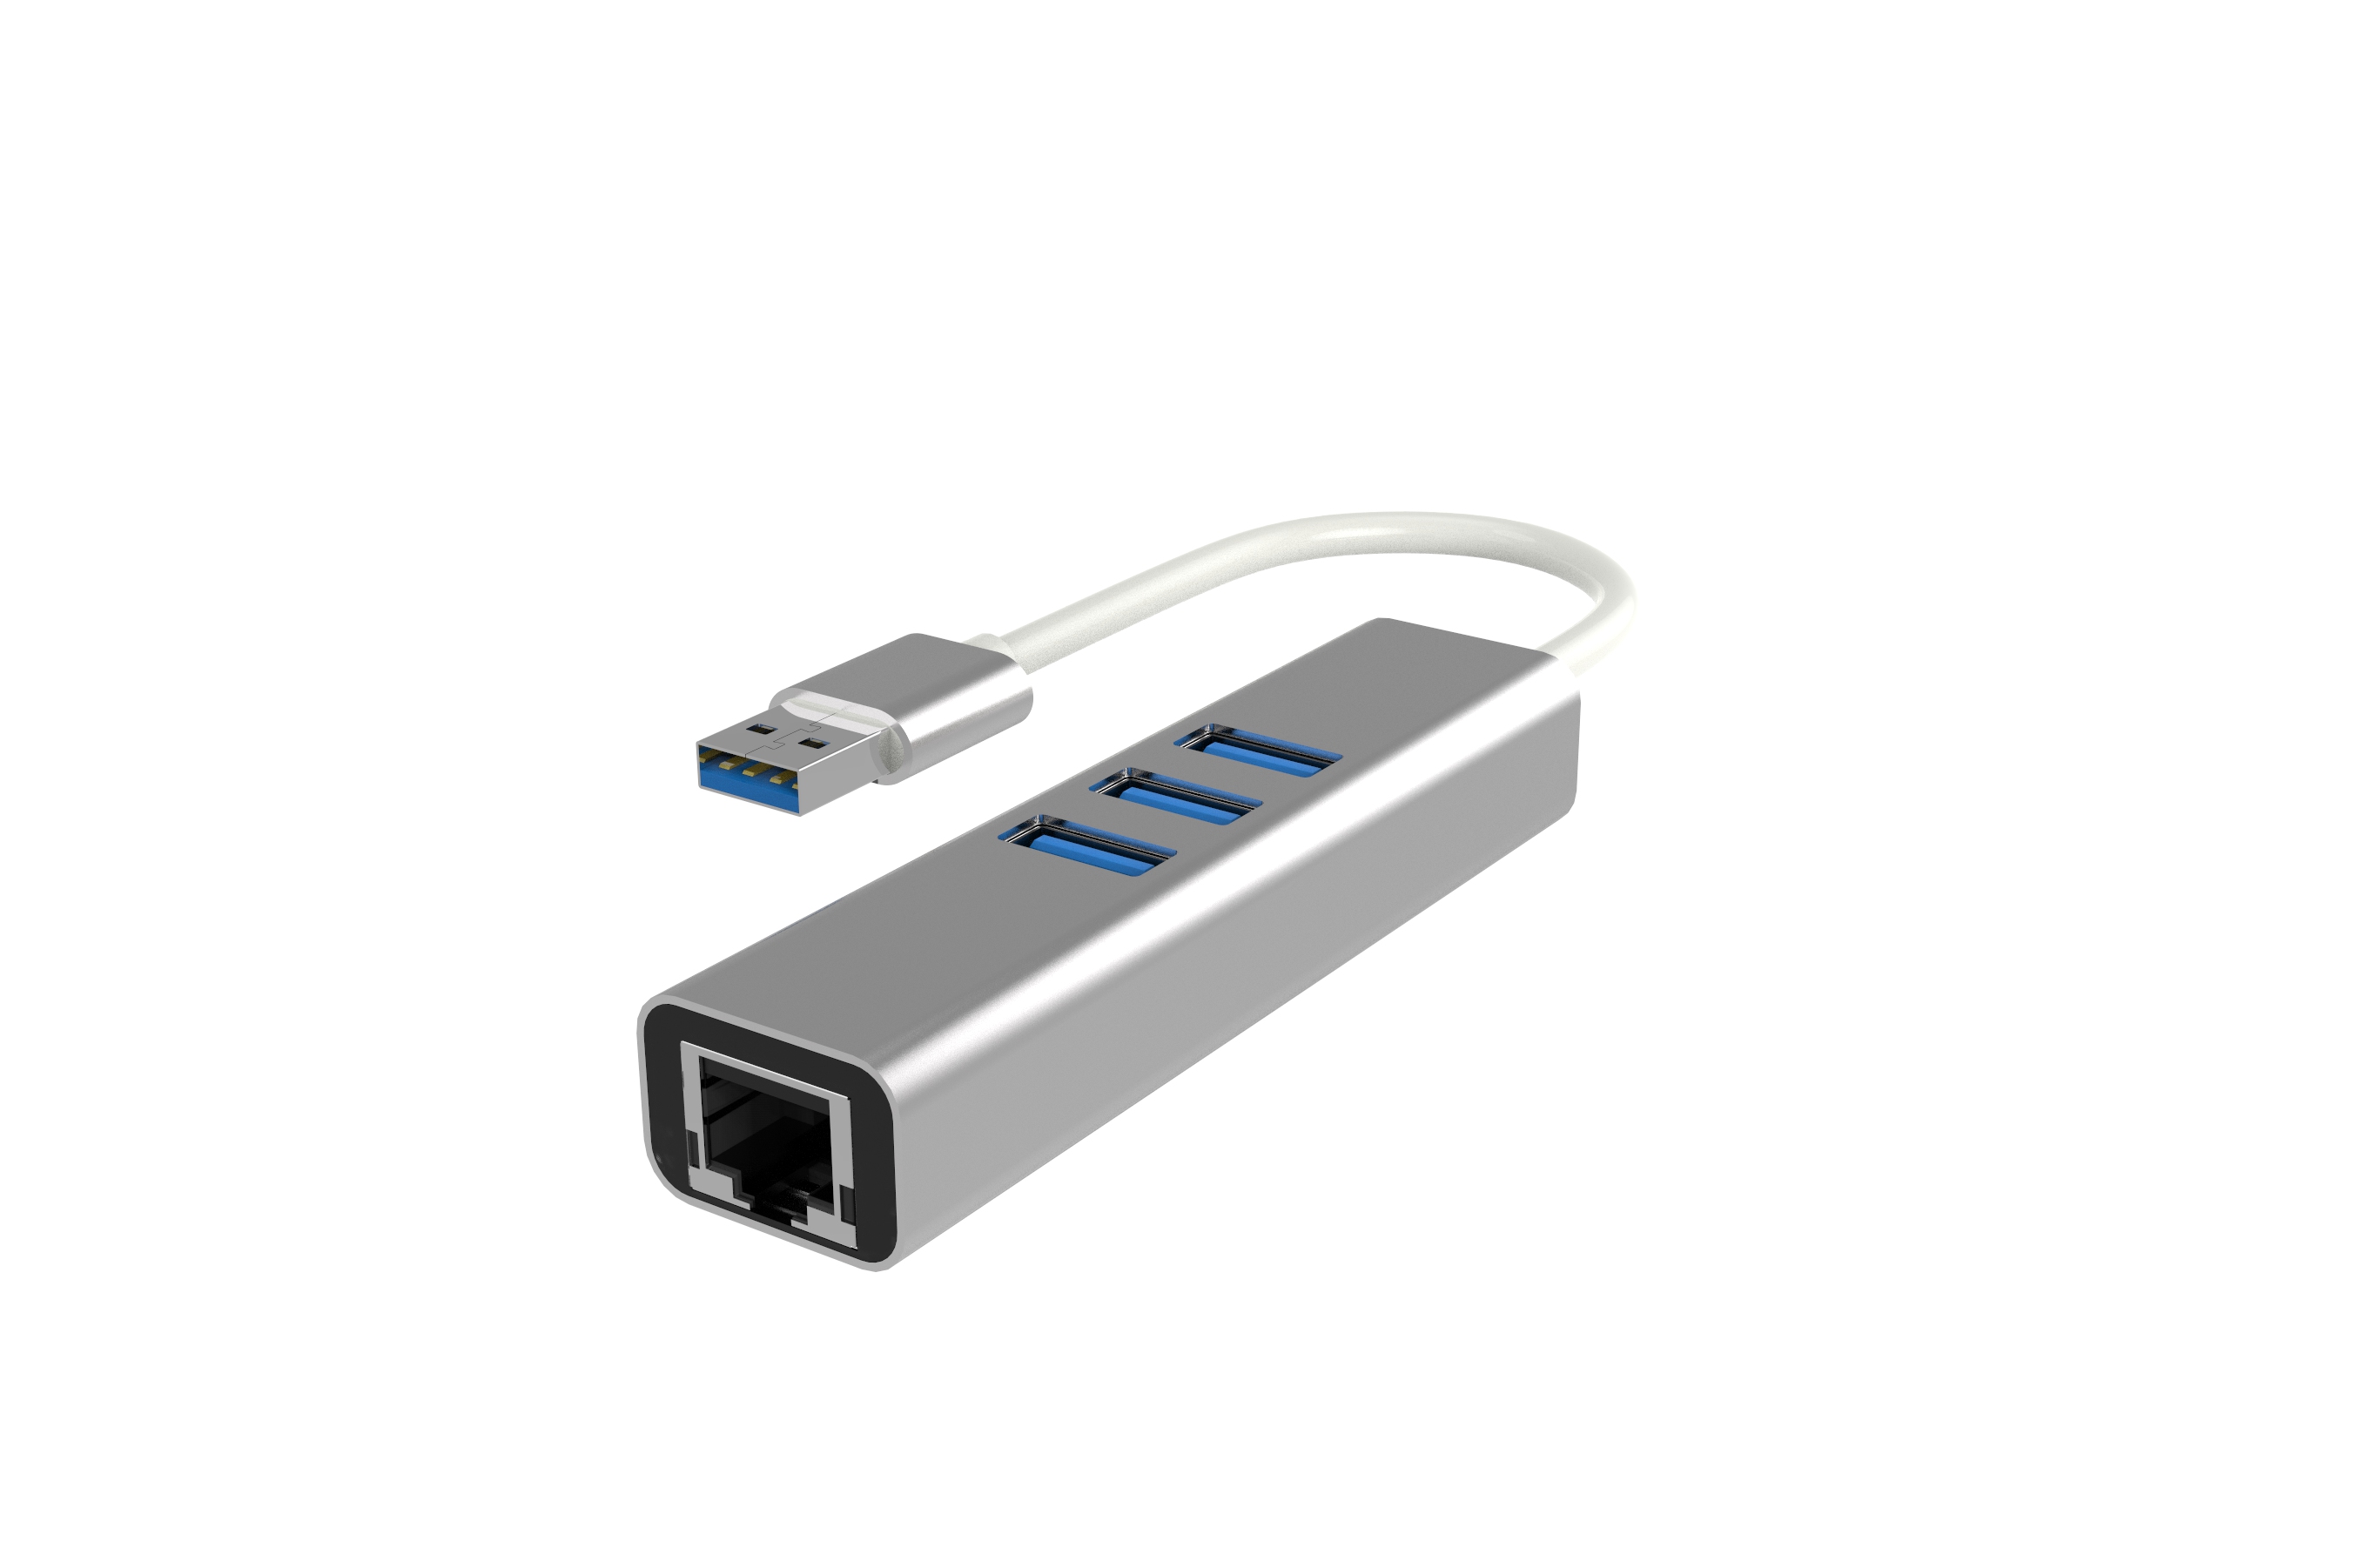 USB 3.0 Hub with Gigabit Ethernet